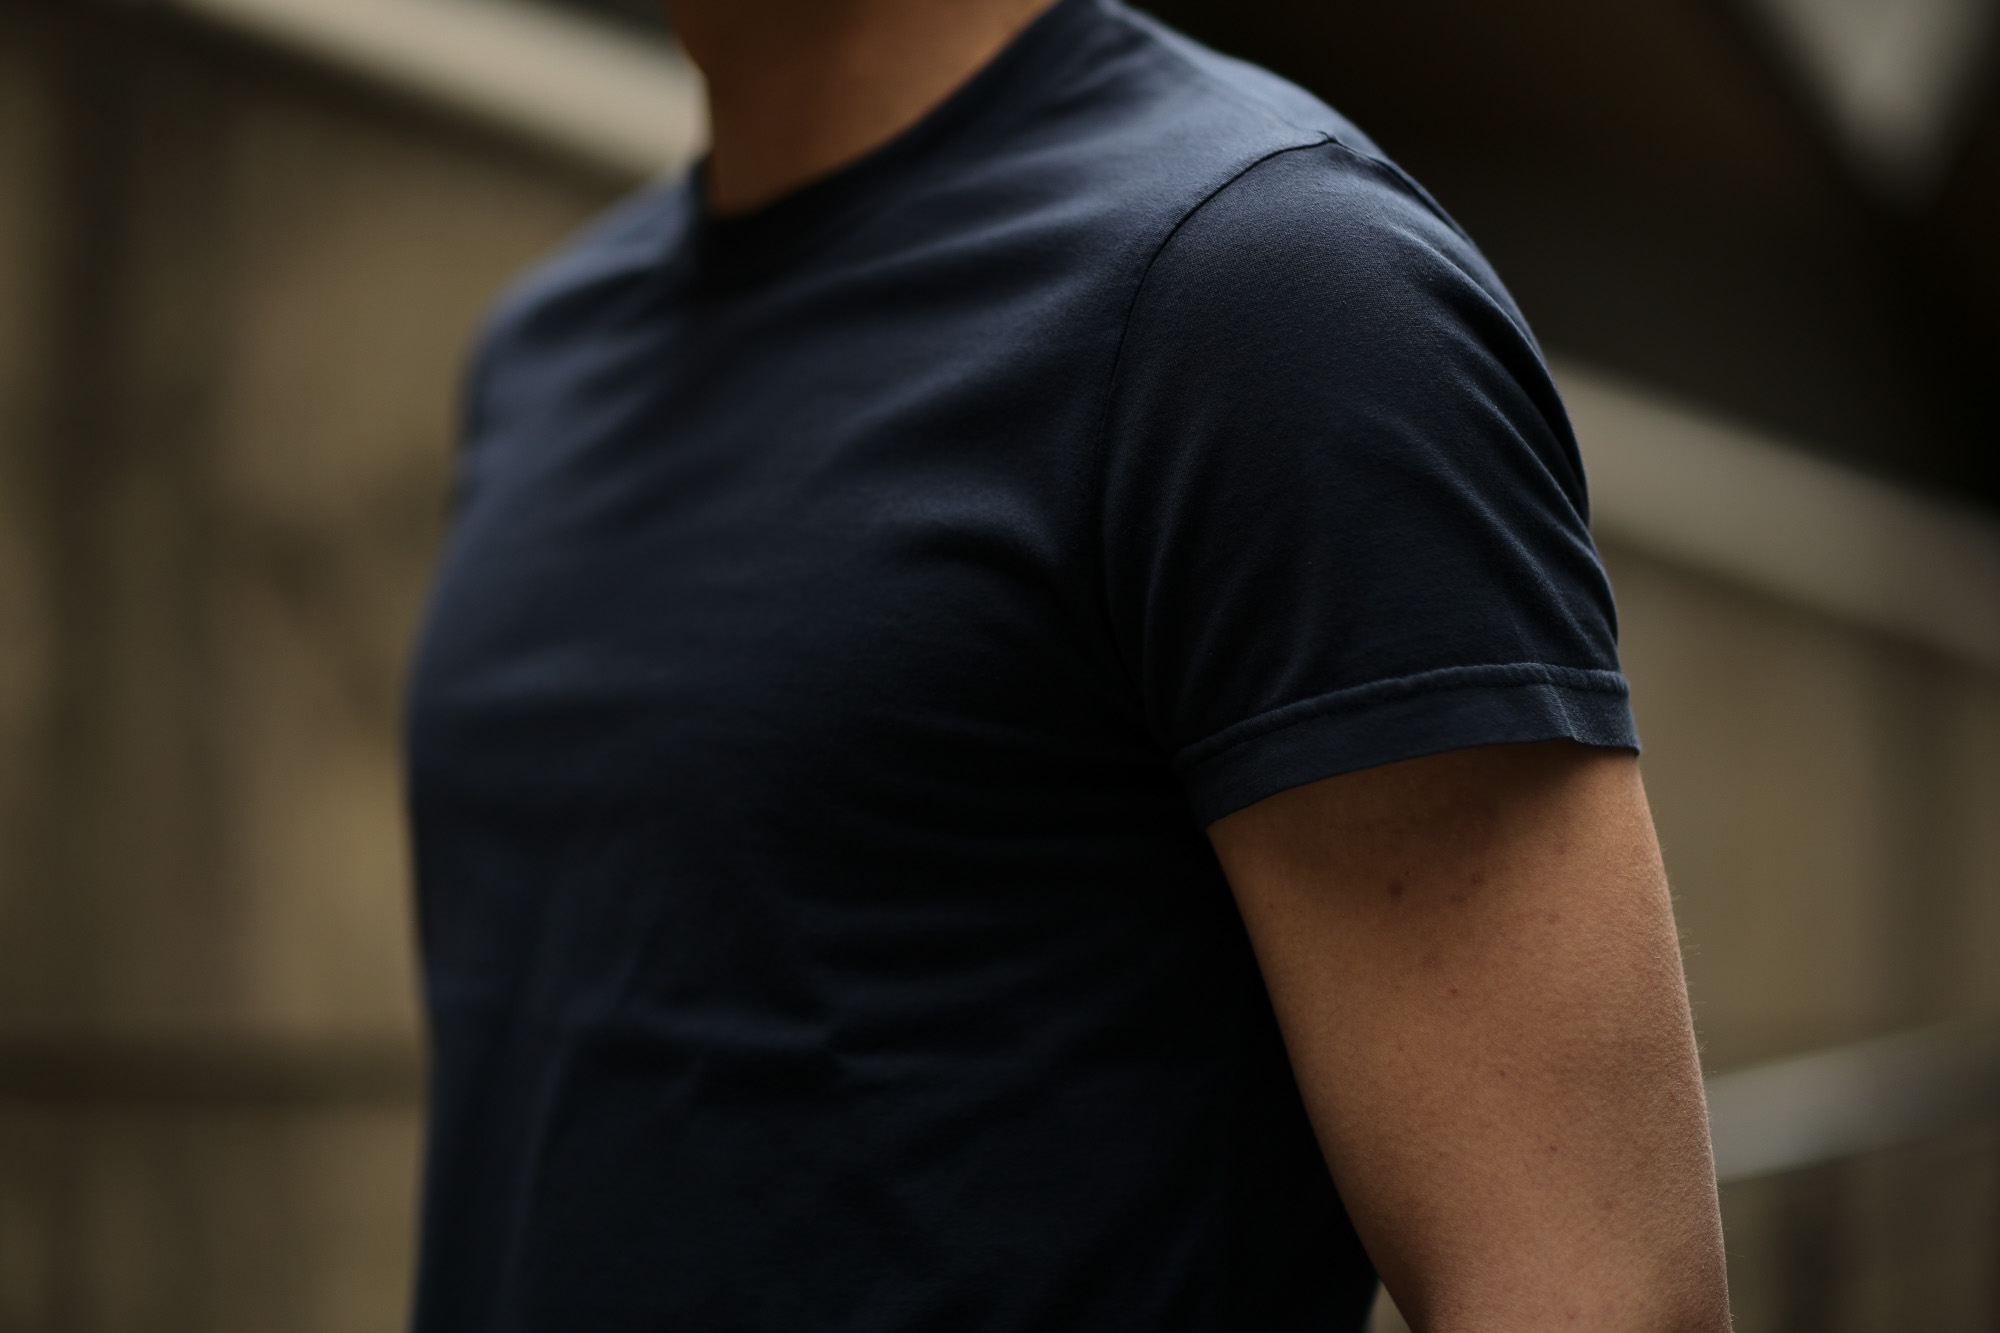 FEDELI (フェデーリ) Crew Neck T-shirt (クルーネック Tシャツ) ギザコットン Tシャツ NAVY (ネイビー・626) made in italy (イタリア製) 2019 春夏新作 愛知 名古屋　altoediritto アルトエデリット